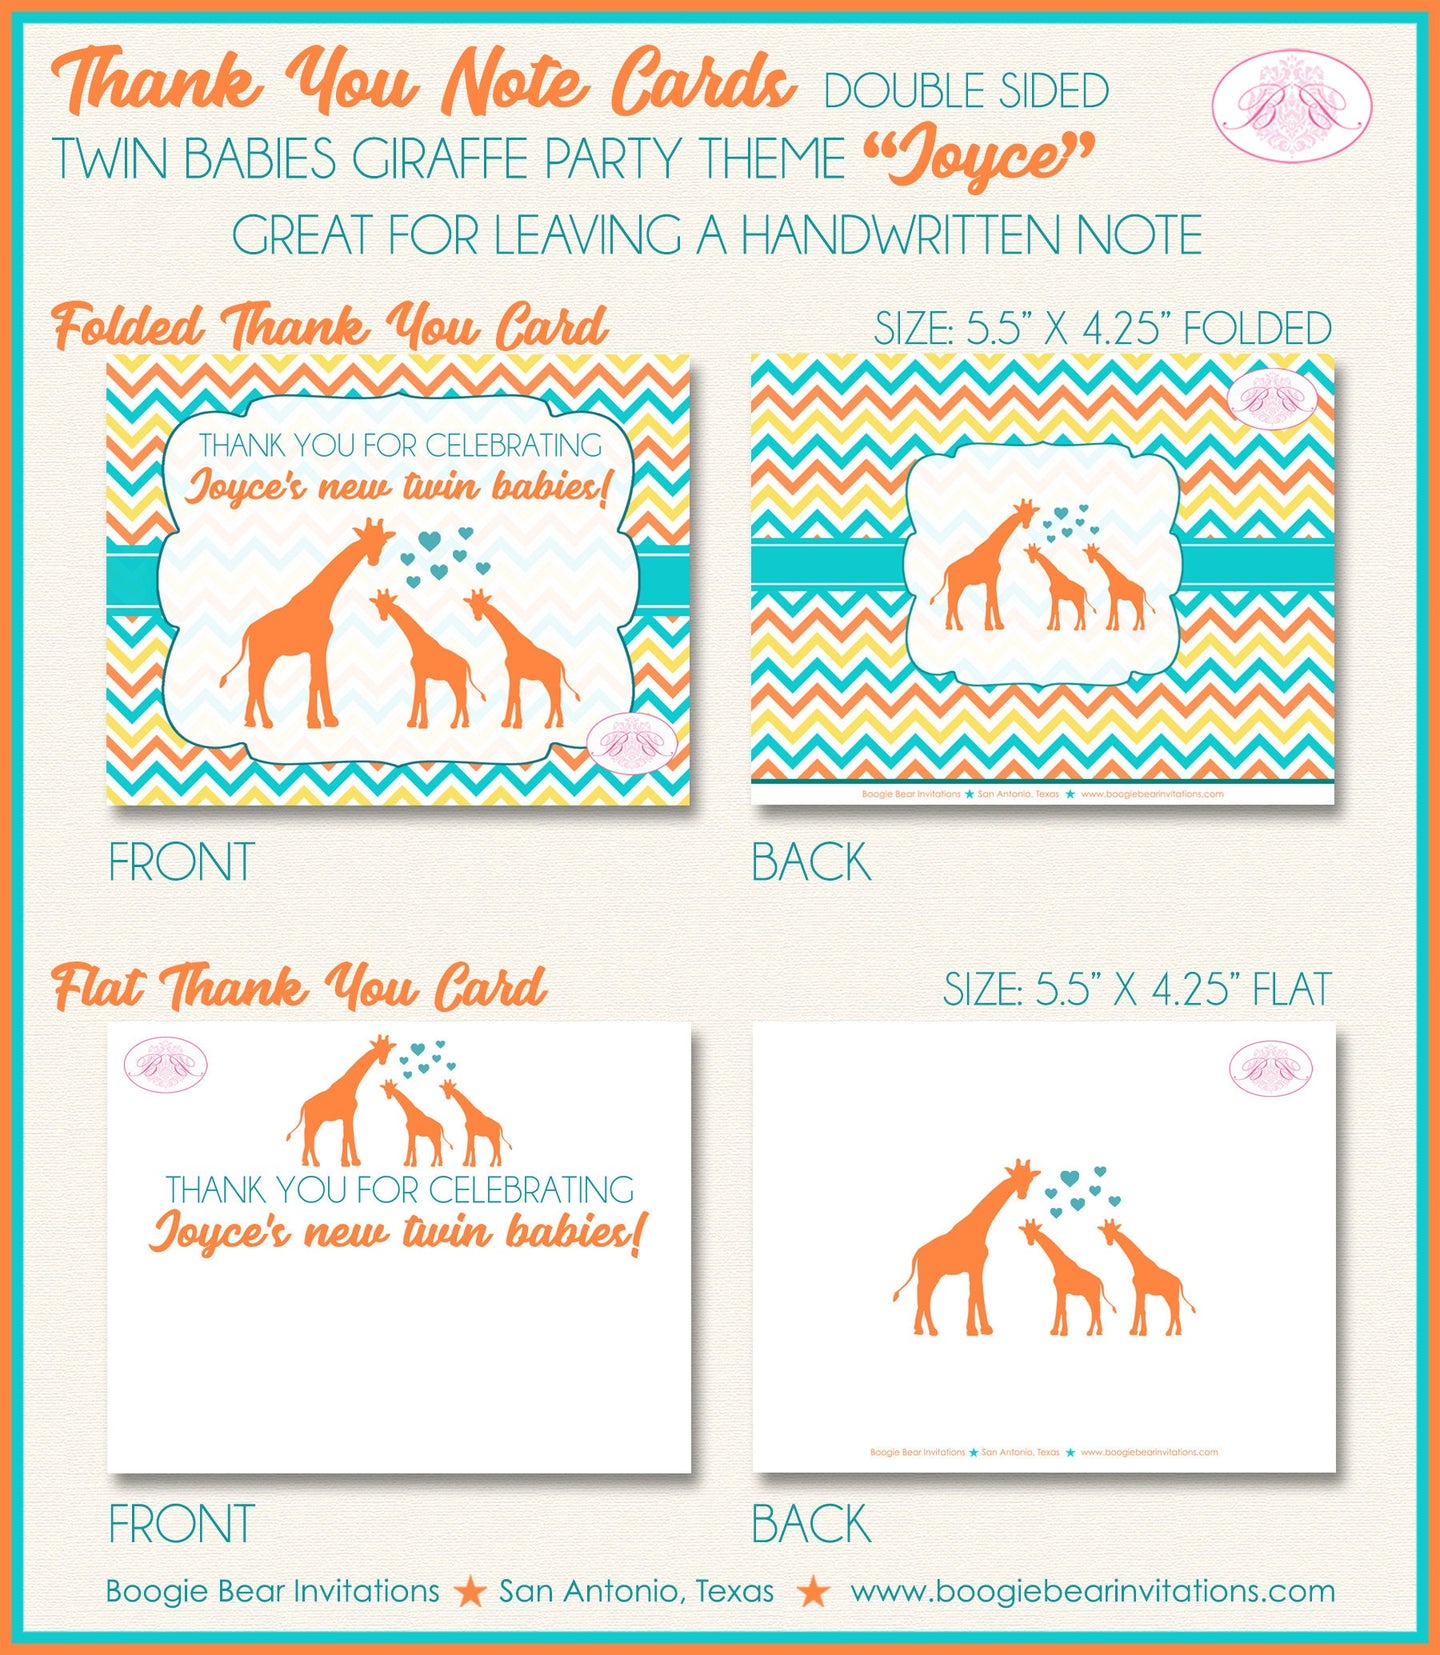 Twins Giraffe Thank You Card Baby Shower Girl Boy Reveal Party Aqua Turquoise Blue Orange Teal Boogie Bear Invitations Joyce Theme Printed